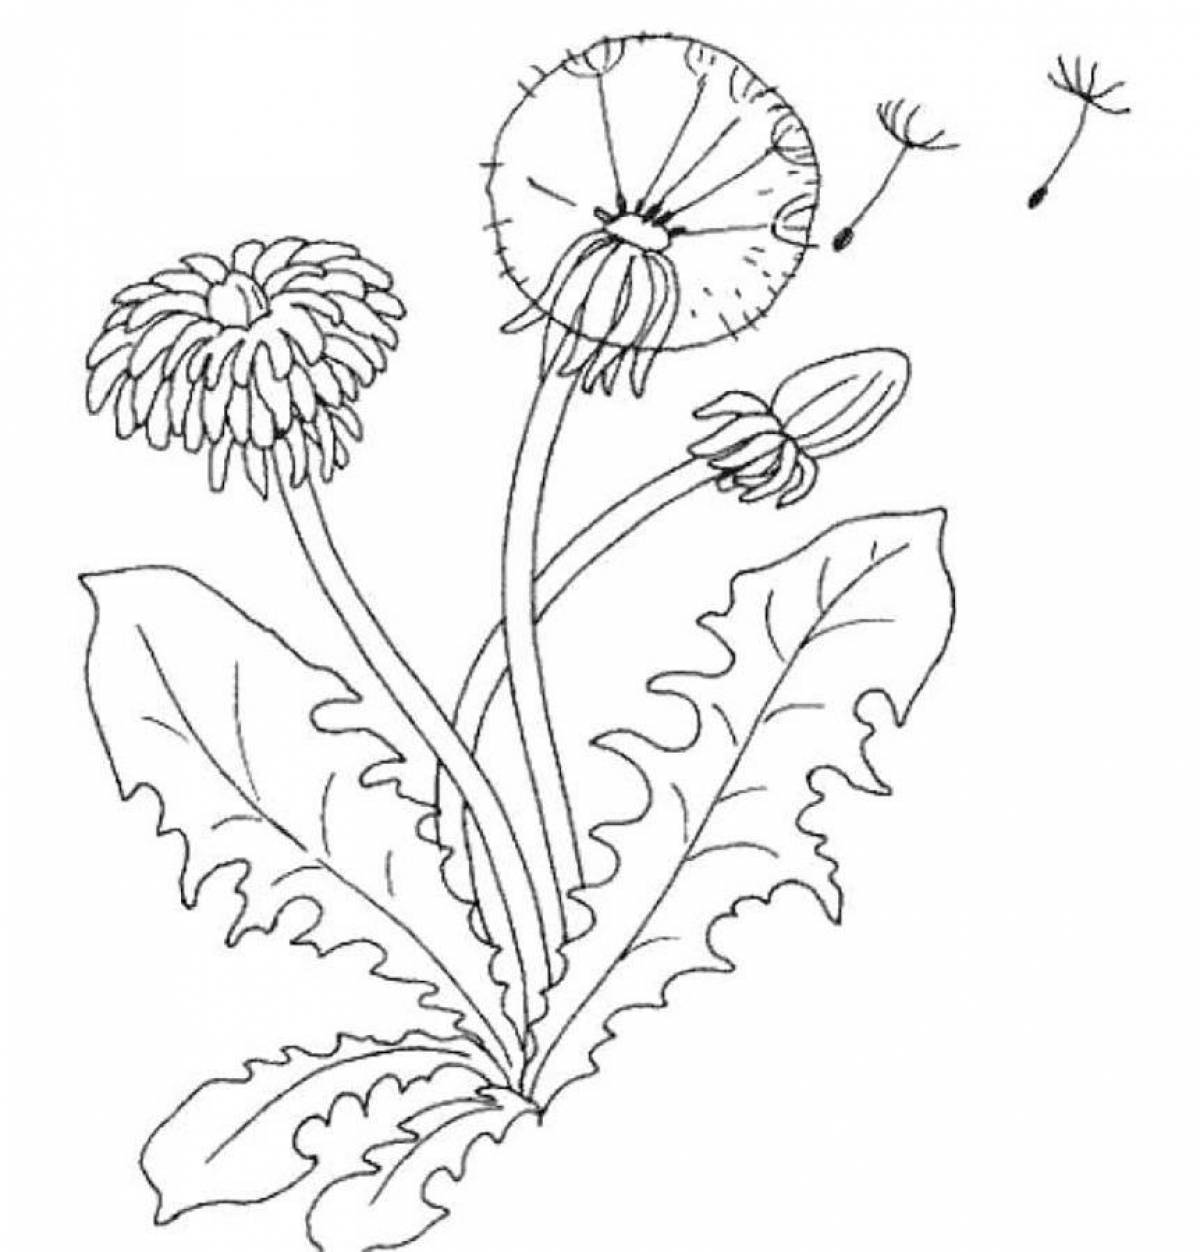 Charming dandelion coloring book